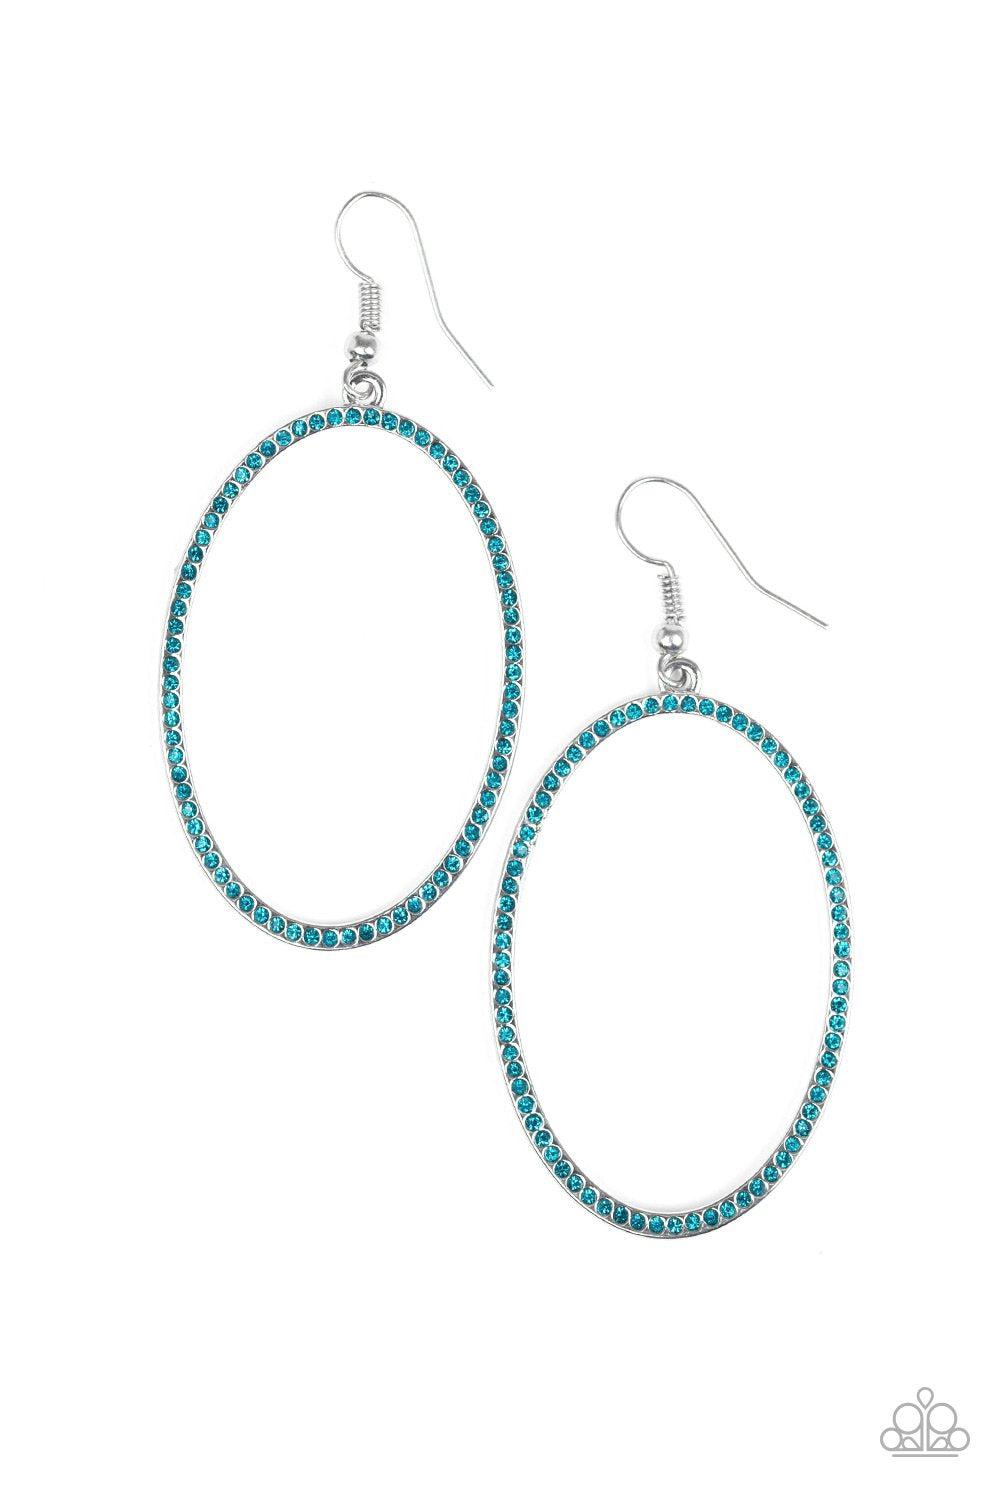 Dazzle On Demand Blue Rhinestone Earrings - Paparazzi Accessories-CarasShop.com - $5 Jewelry by Cara Jewels